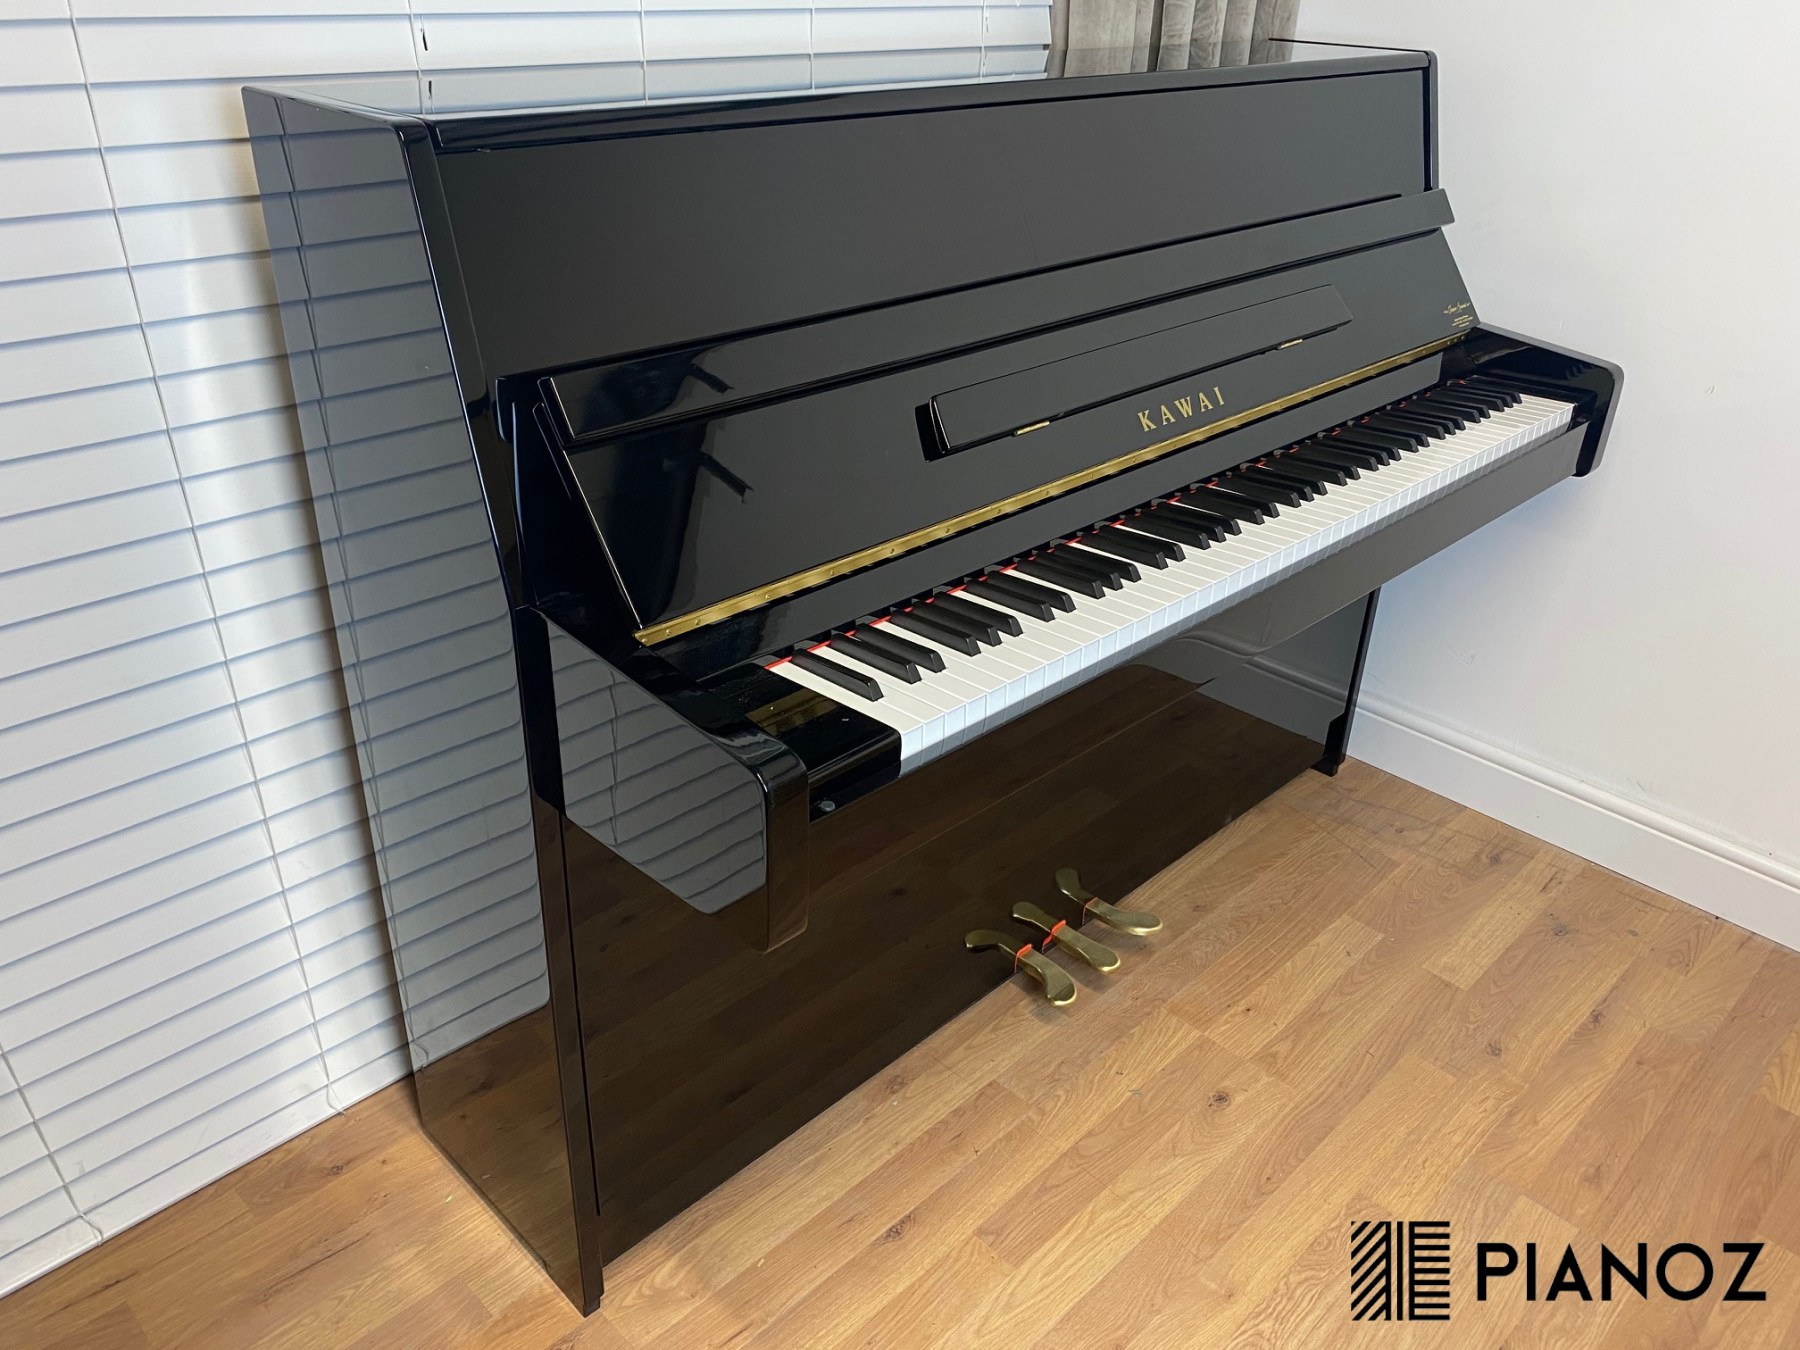 Kawai K15 ATX Silent Upright Piano piano for sale in UK